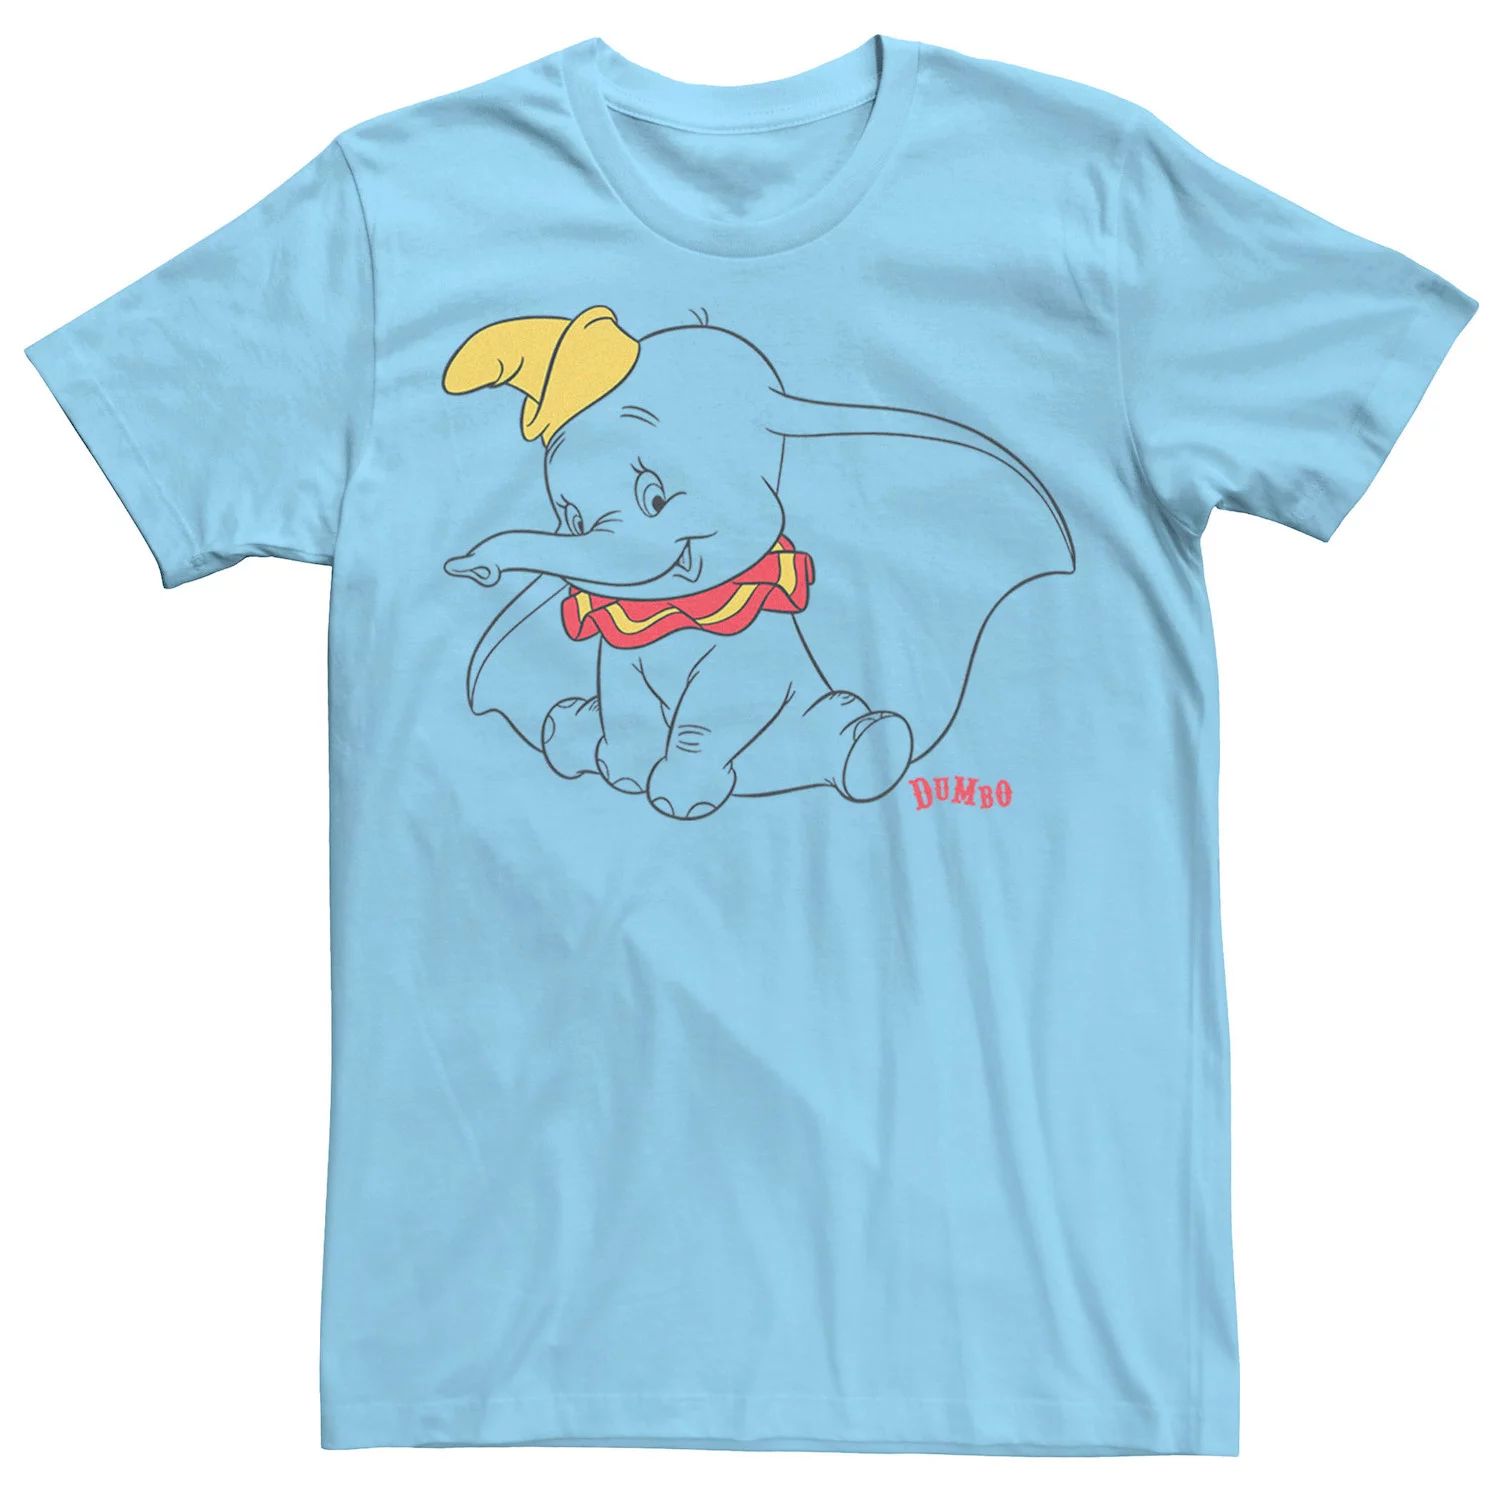 Мужская футболка с логотипом Dumbo Outline Disney, светло-синий